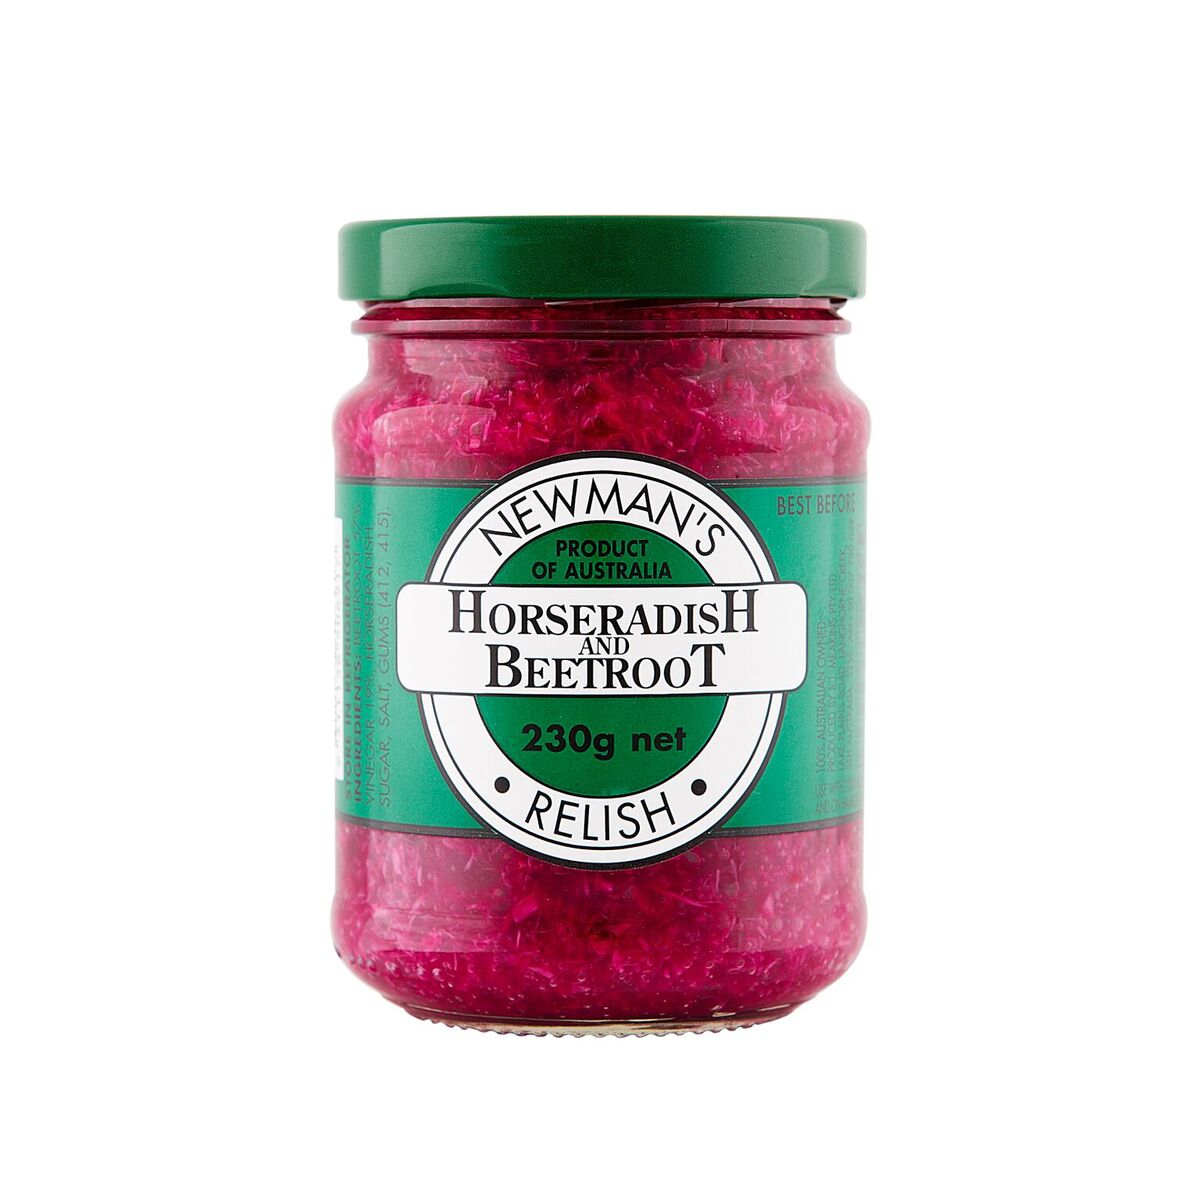 Newman's Horseradish Products